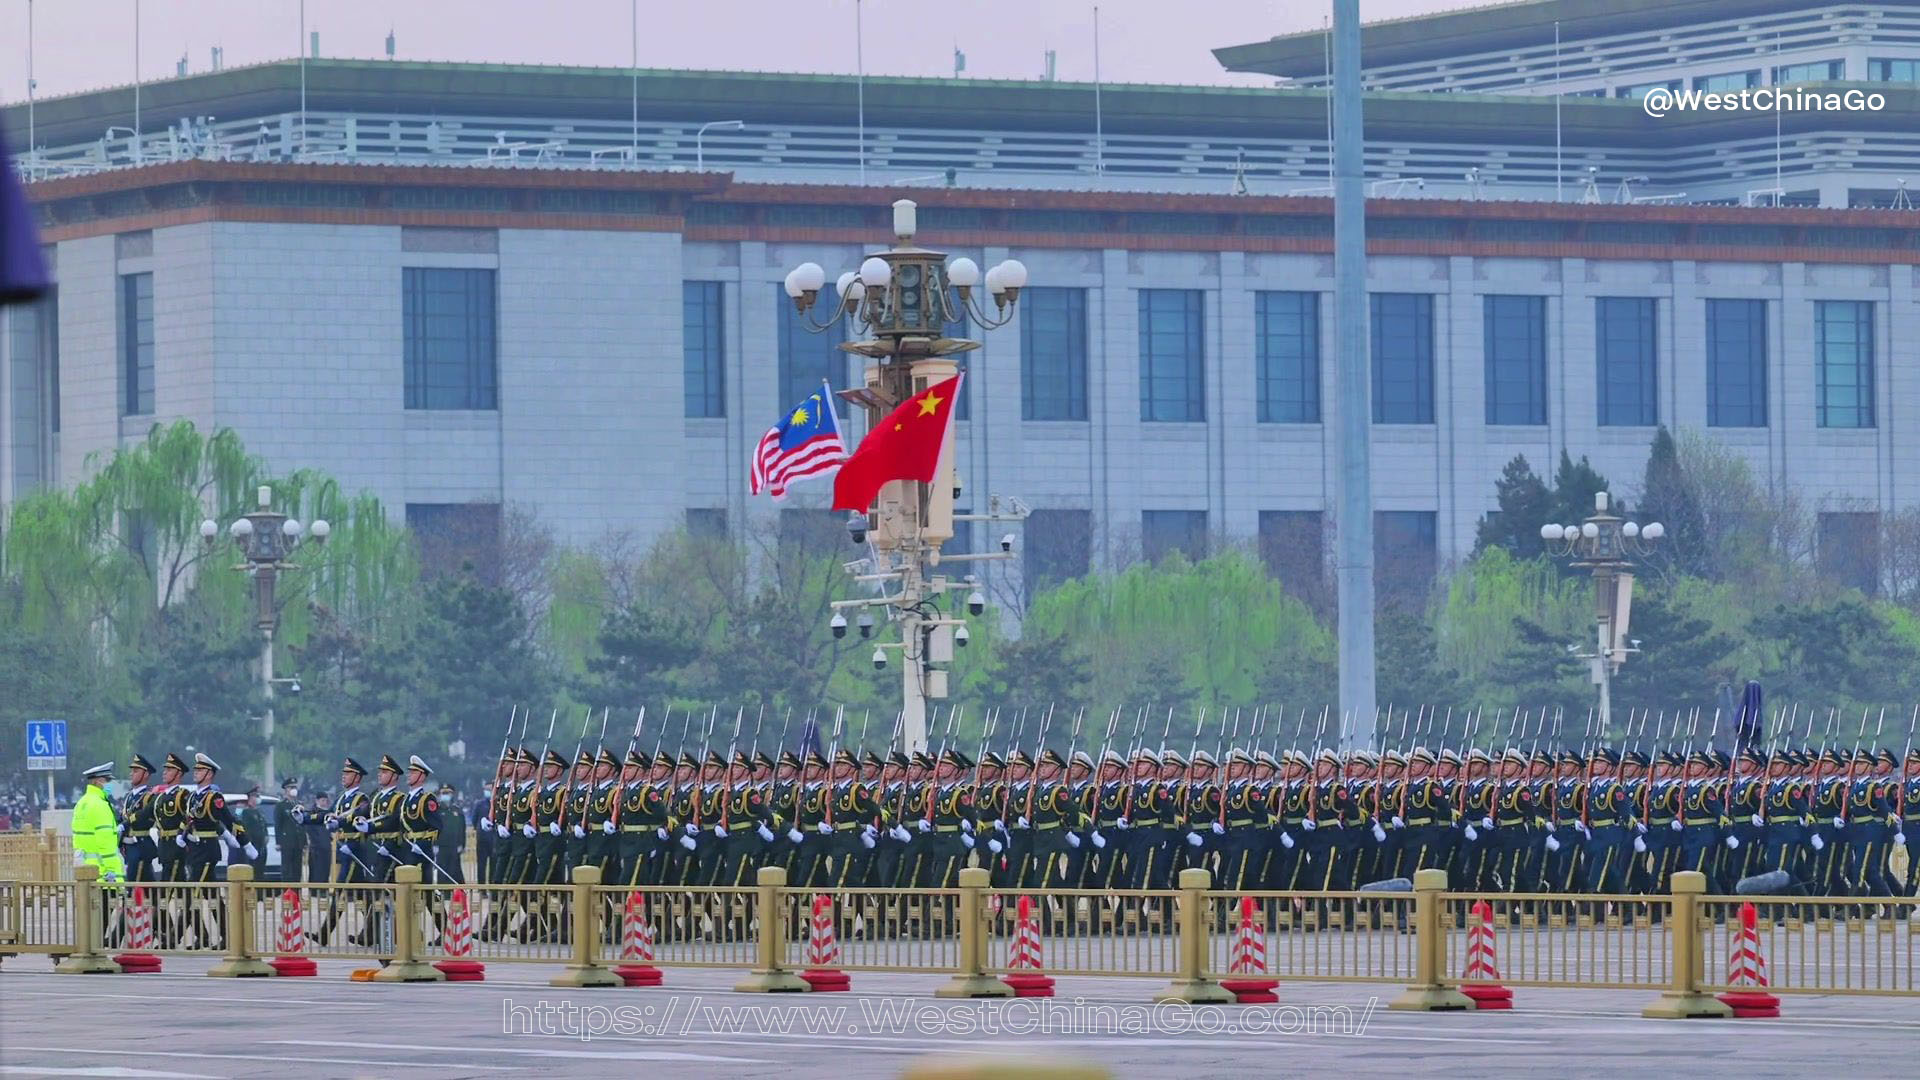 BeiJing TianAnMen Square